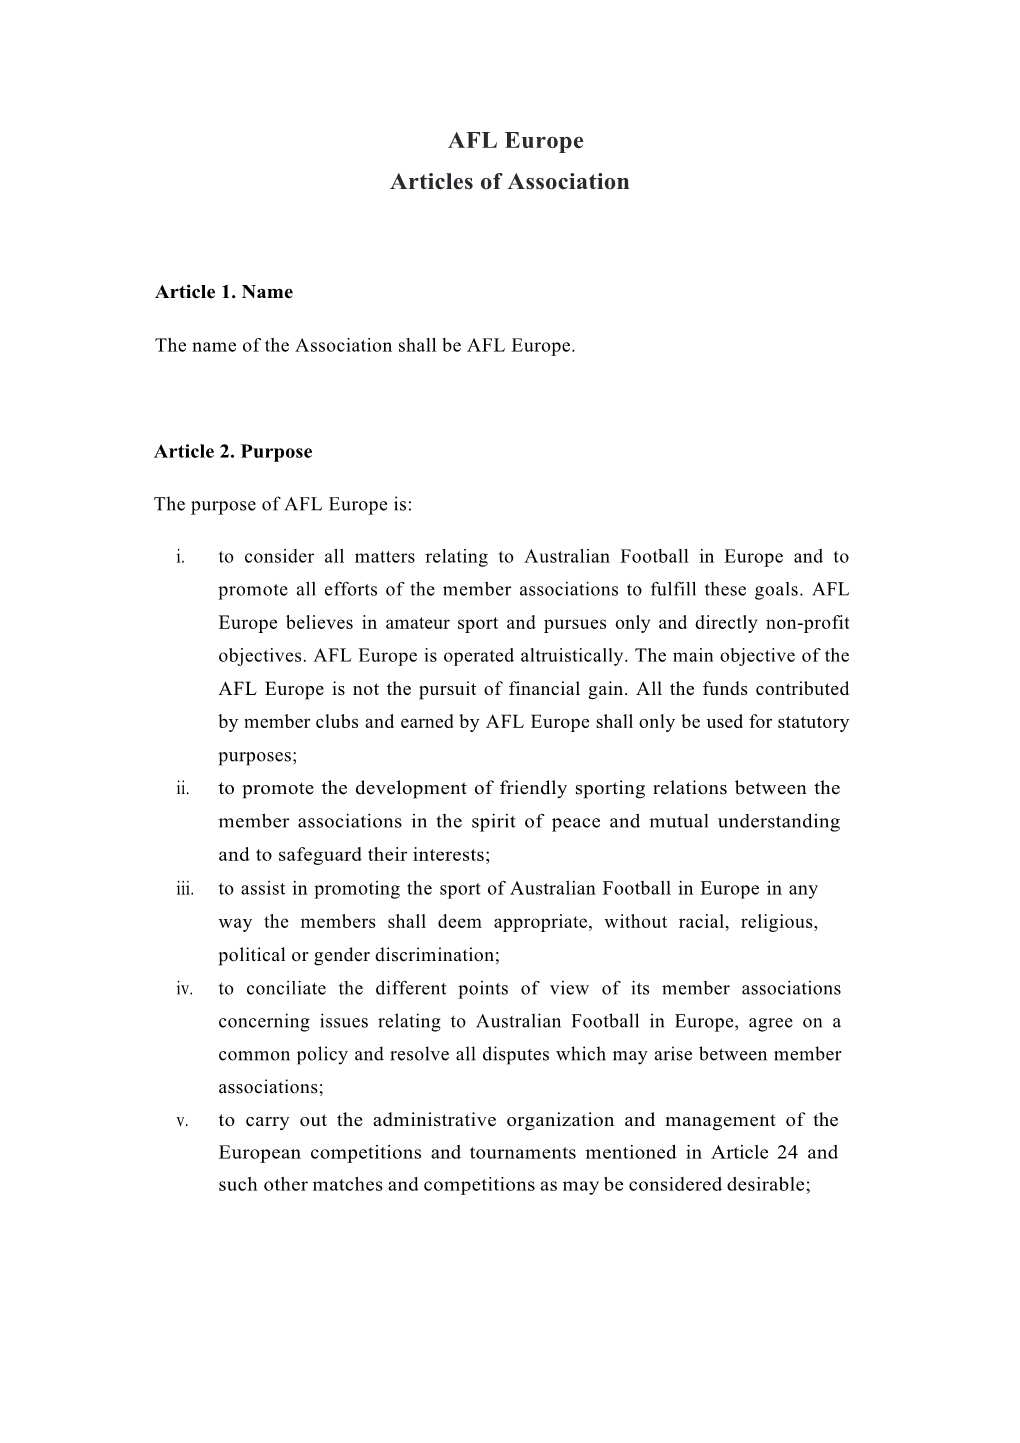 AFL Europe Articles of Association